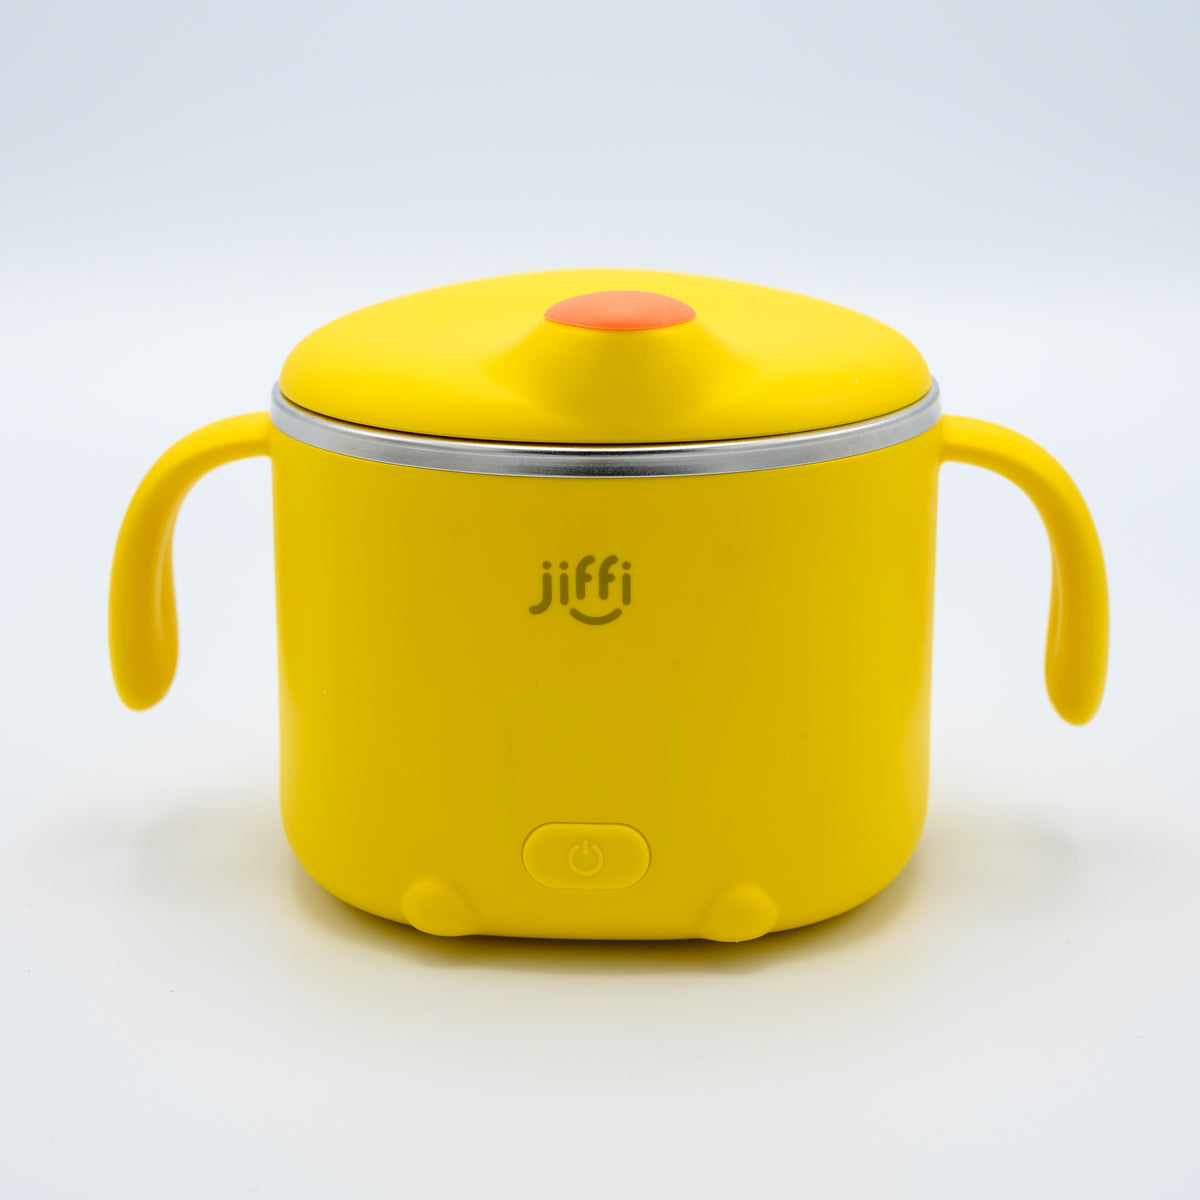 What breastfeeding accessories do I need? - Jiffi Baby's – Jiffi Baby's